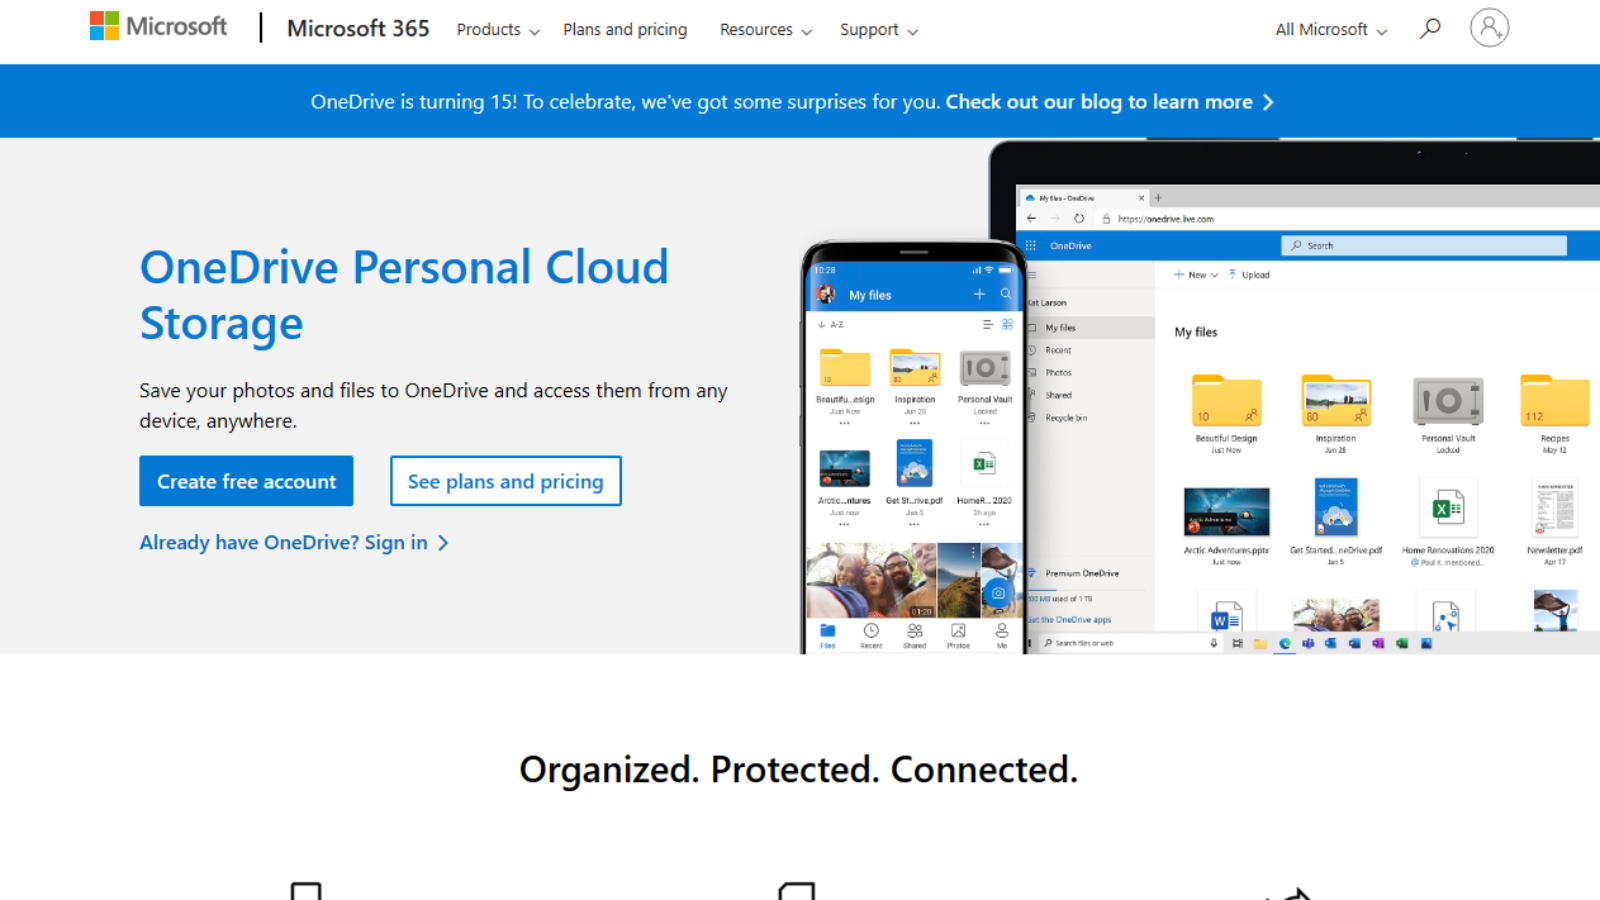 Microsoft OneDrive Cloud Storage and File Sharing